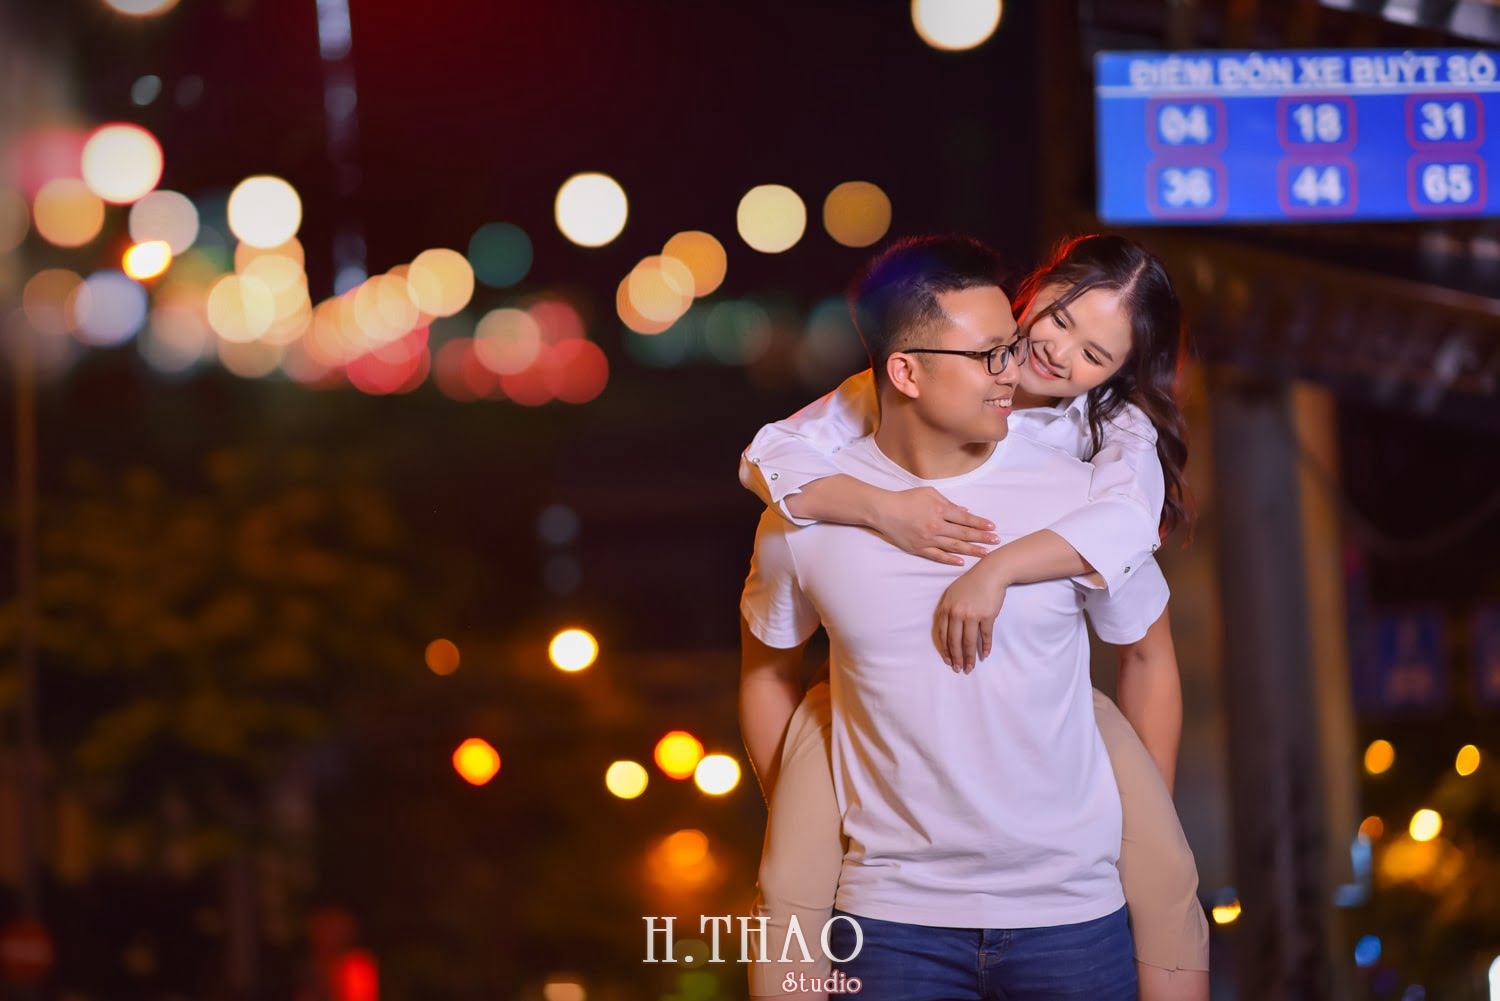 Anh chup couple ban dem 1 min - Album ảnh couple chụp buổi tối đẹp lung linh - HThao Studio